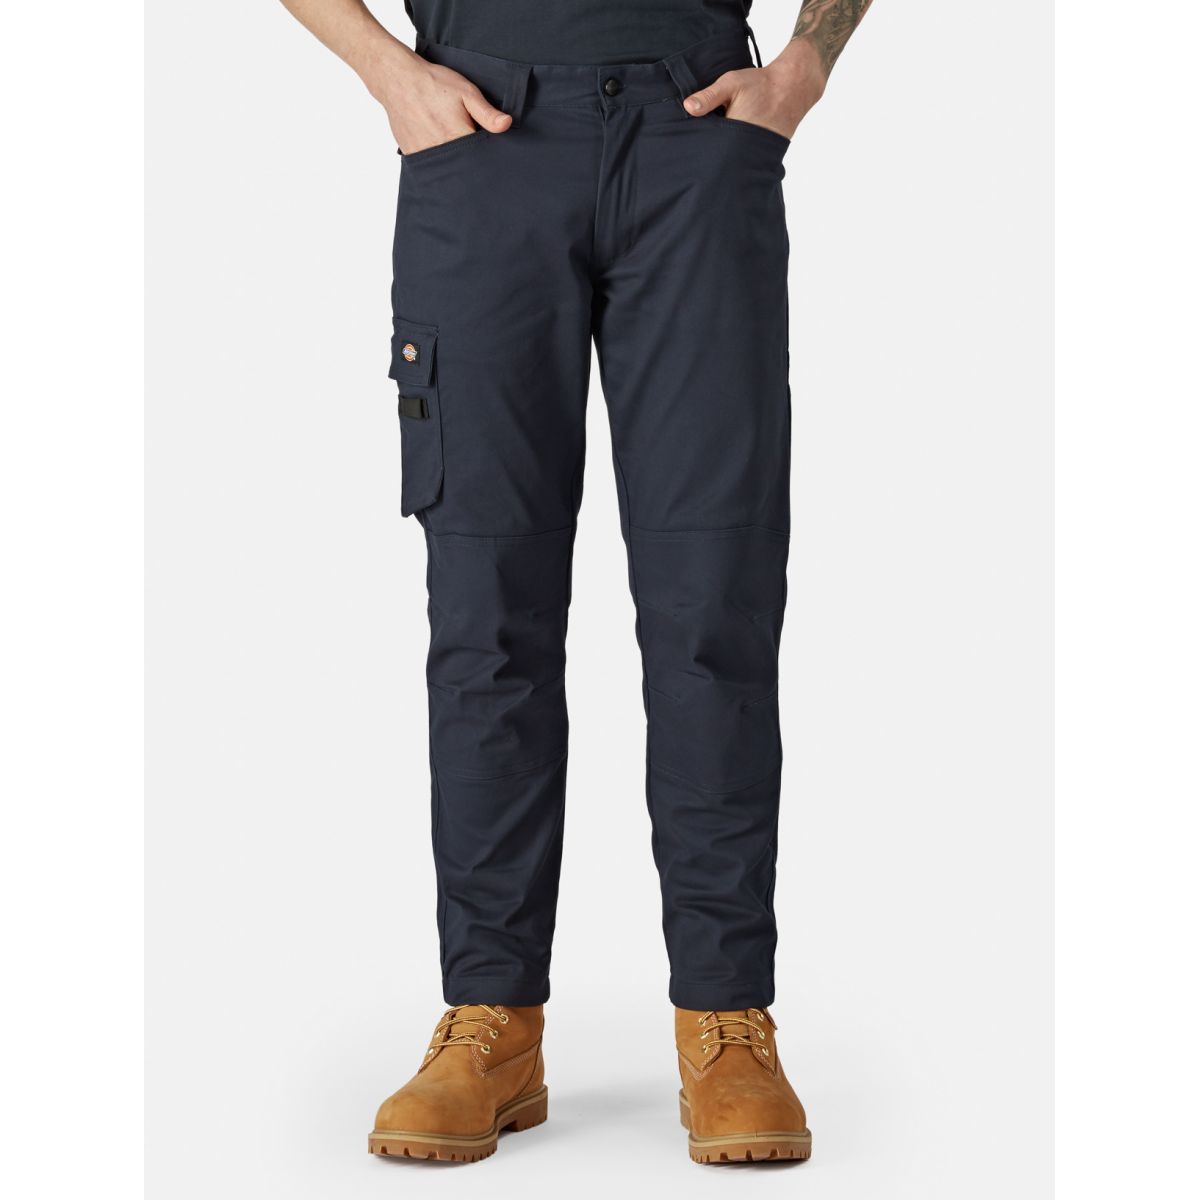 Pantalon Lead In Flex Bleu marine - Dickies - Taille 44 1